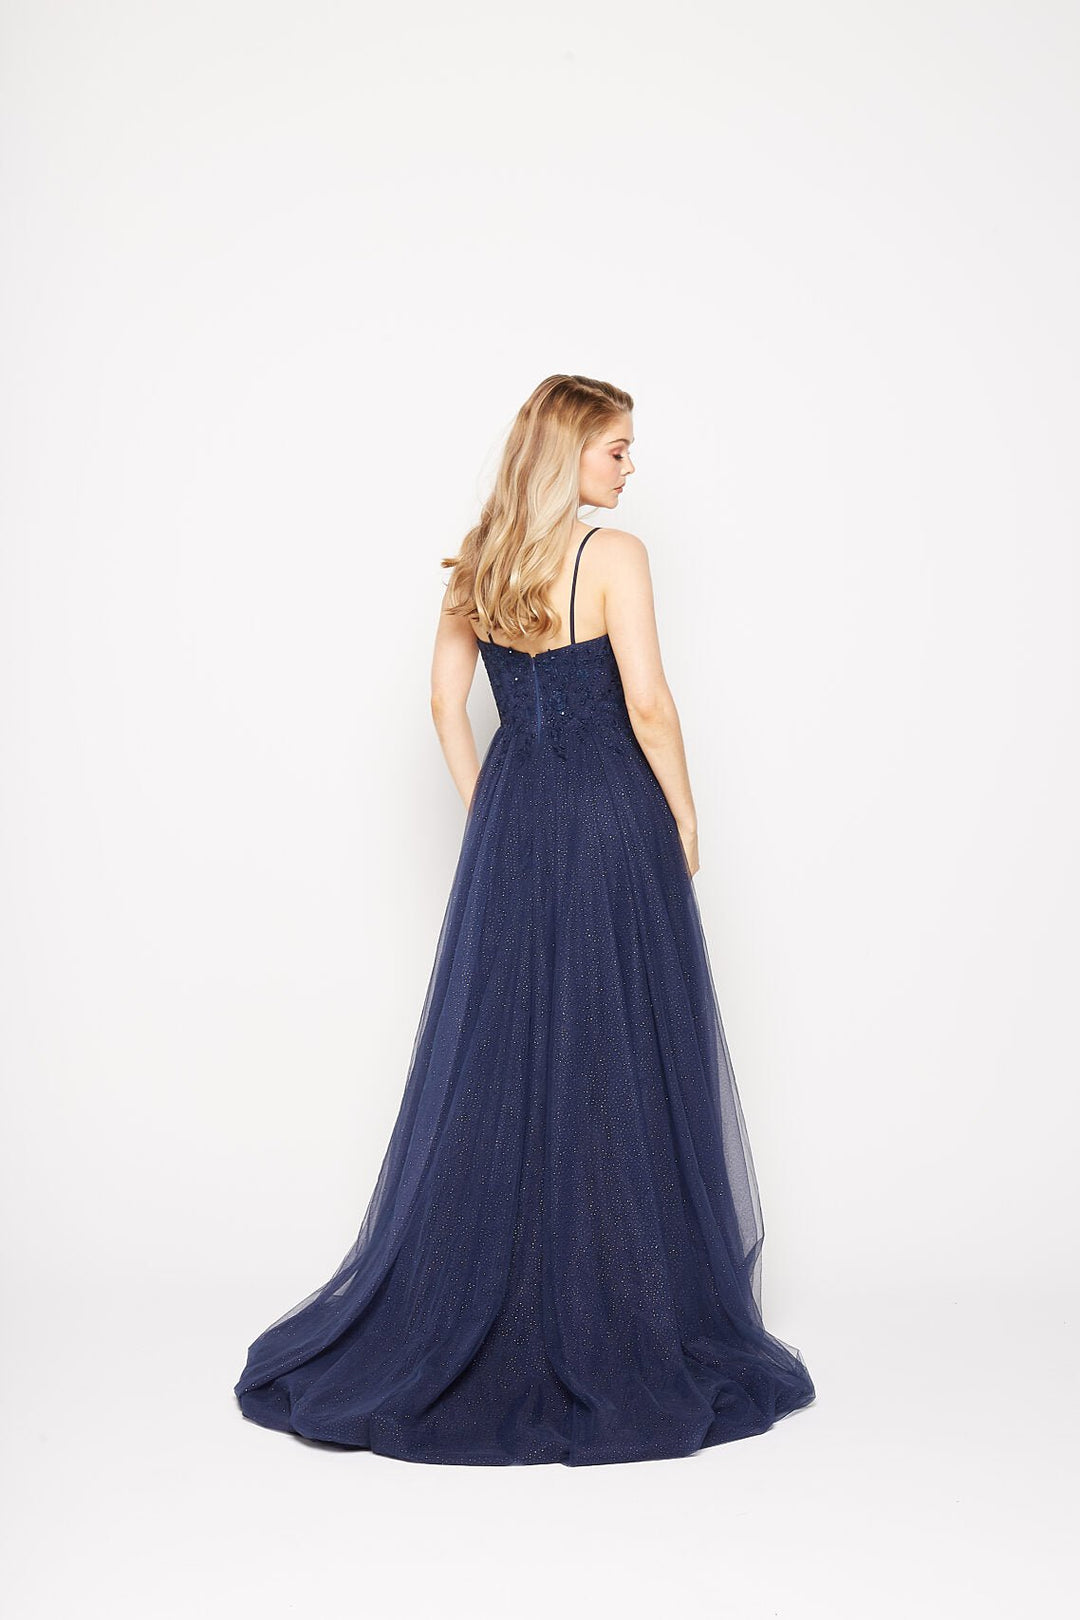 Calanthe Dress by Tania Olsen PO2306 - ElissaJay Boutique